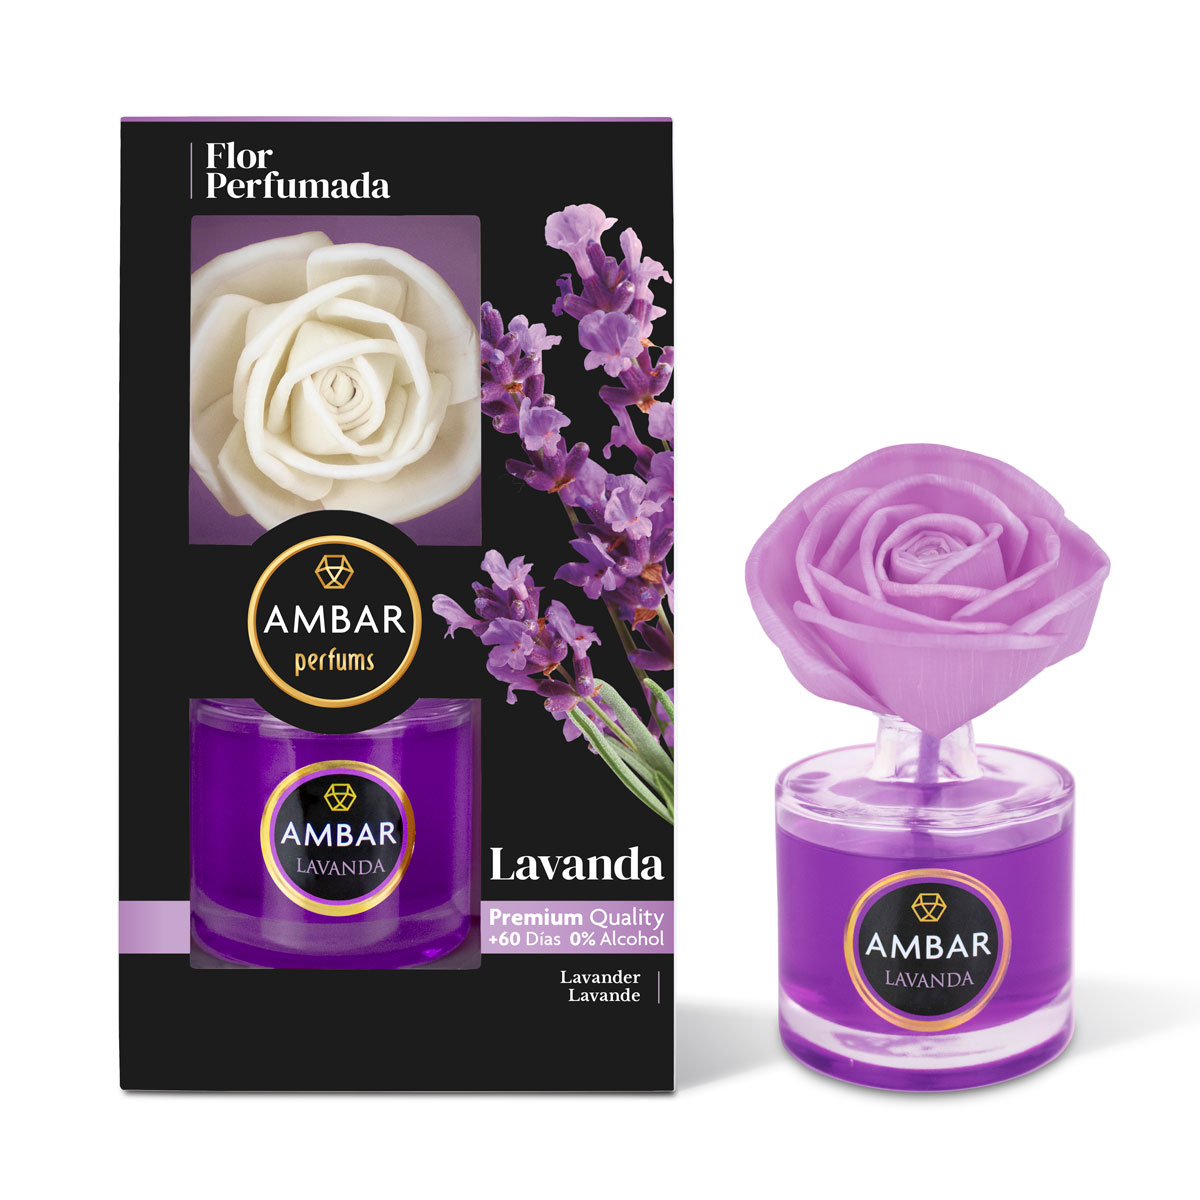 PB-logo-AMBAR - Perfums & Beauty